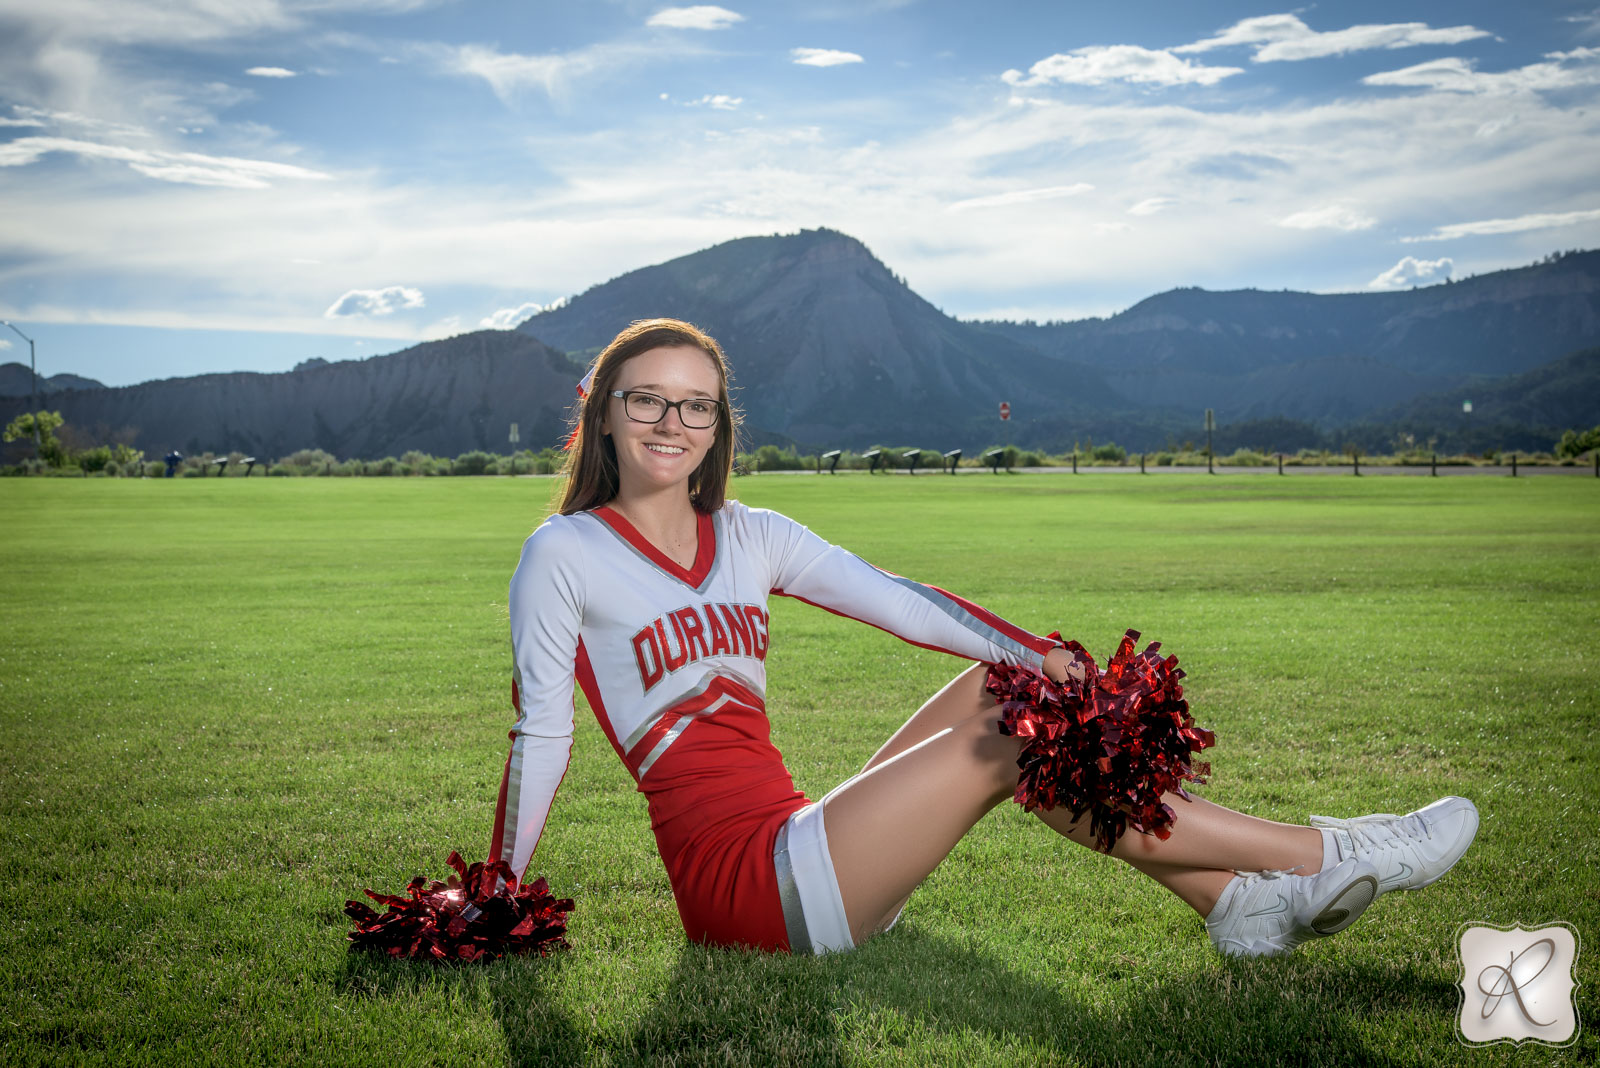 Sporty senior pictures in Durango, Colorado - cheerleading